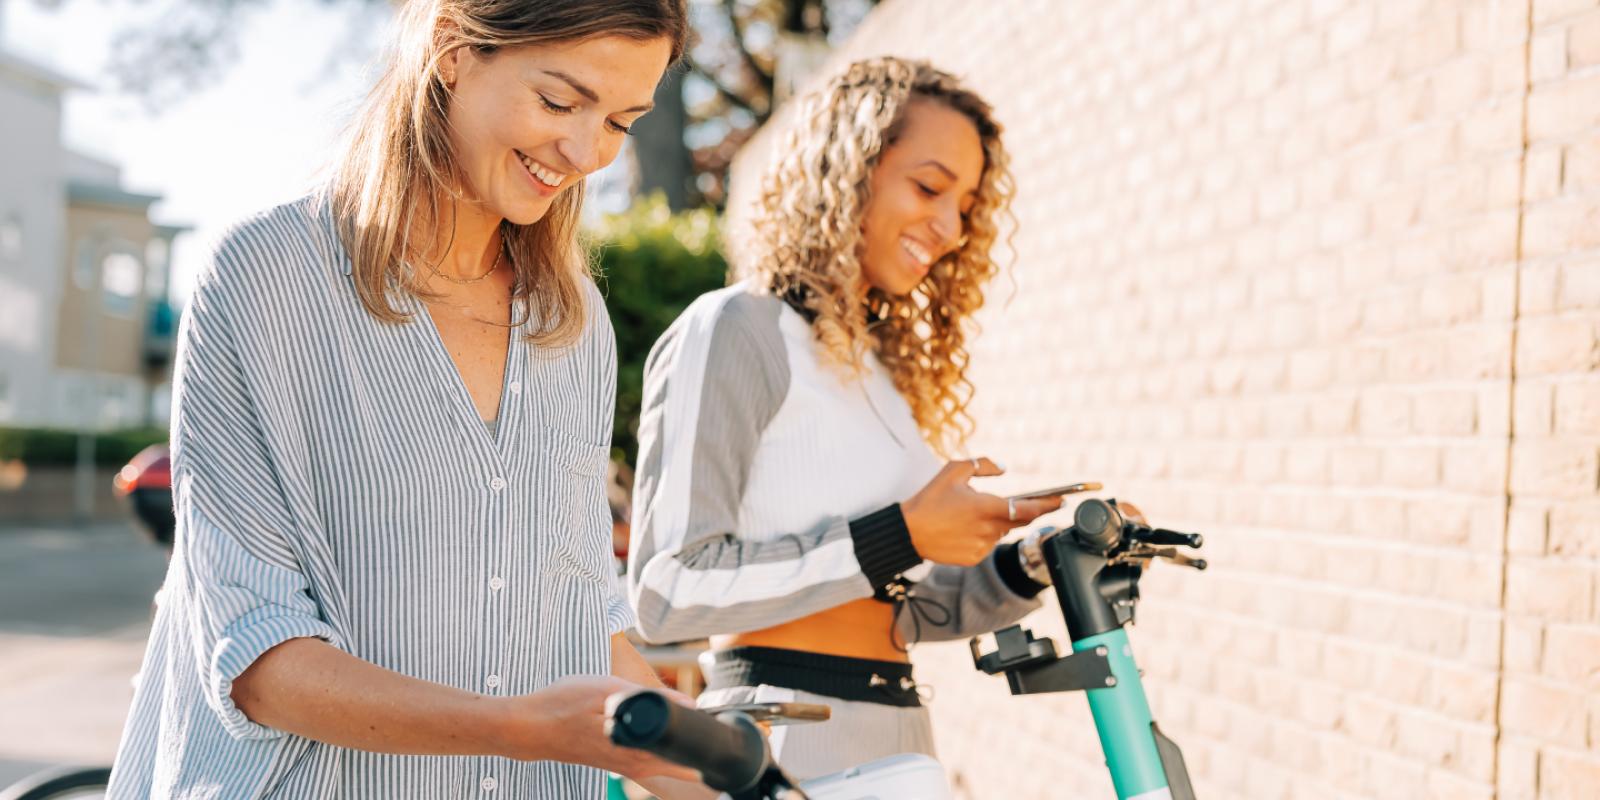 Two young women unlocking their Beryl bikes